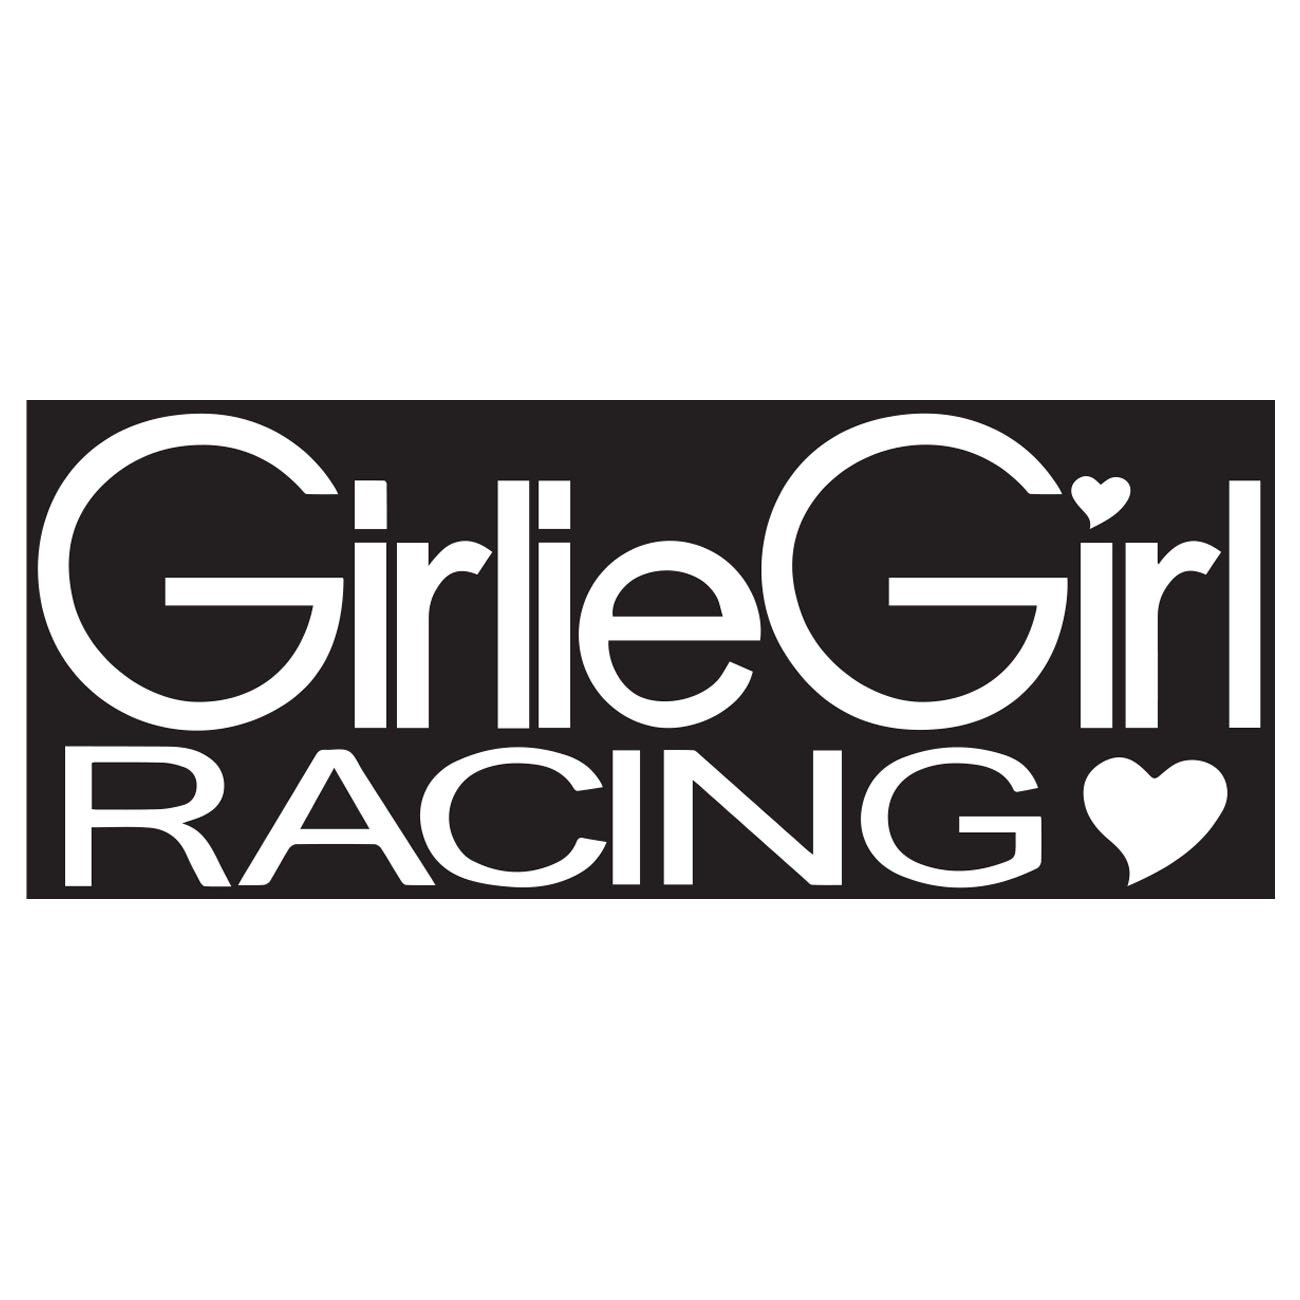 Girlie girl racing